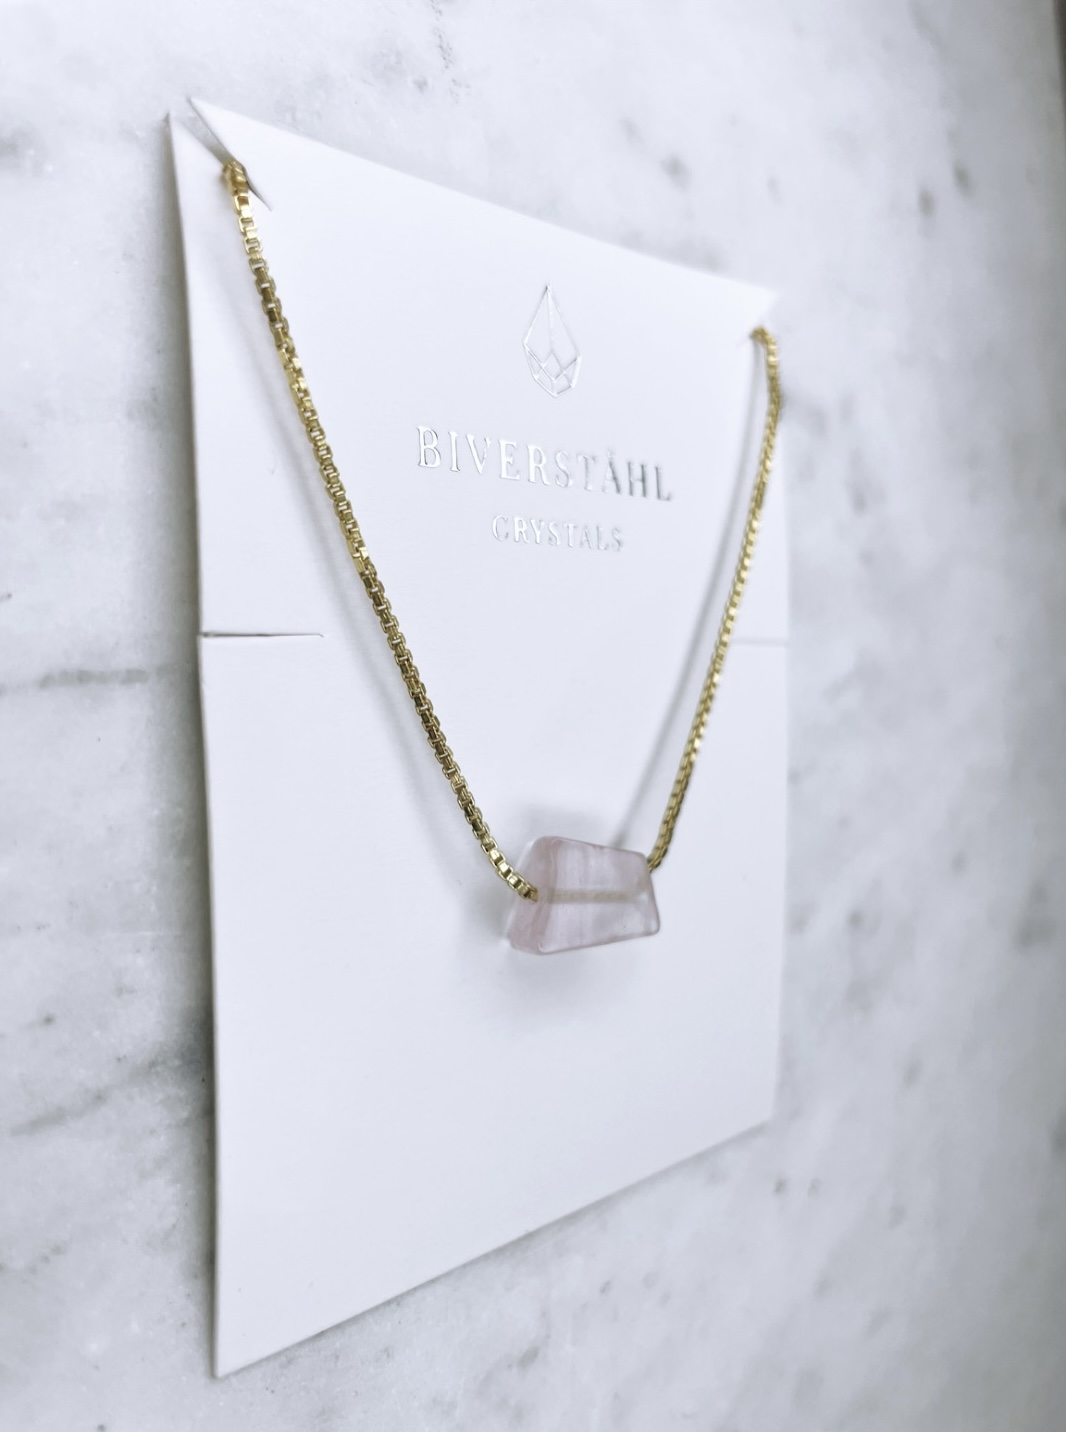 "Self-Love necklace" Rosenkvarts, halsband från Biverståhl Crystals